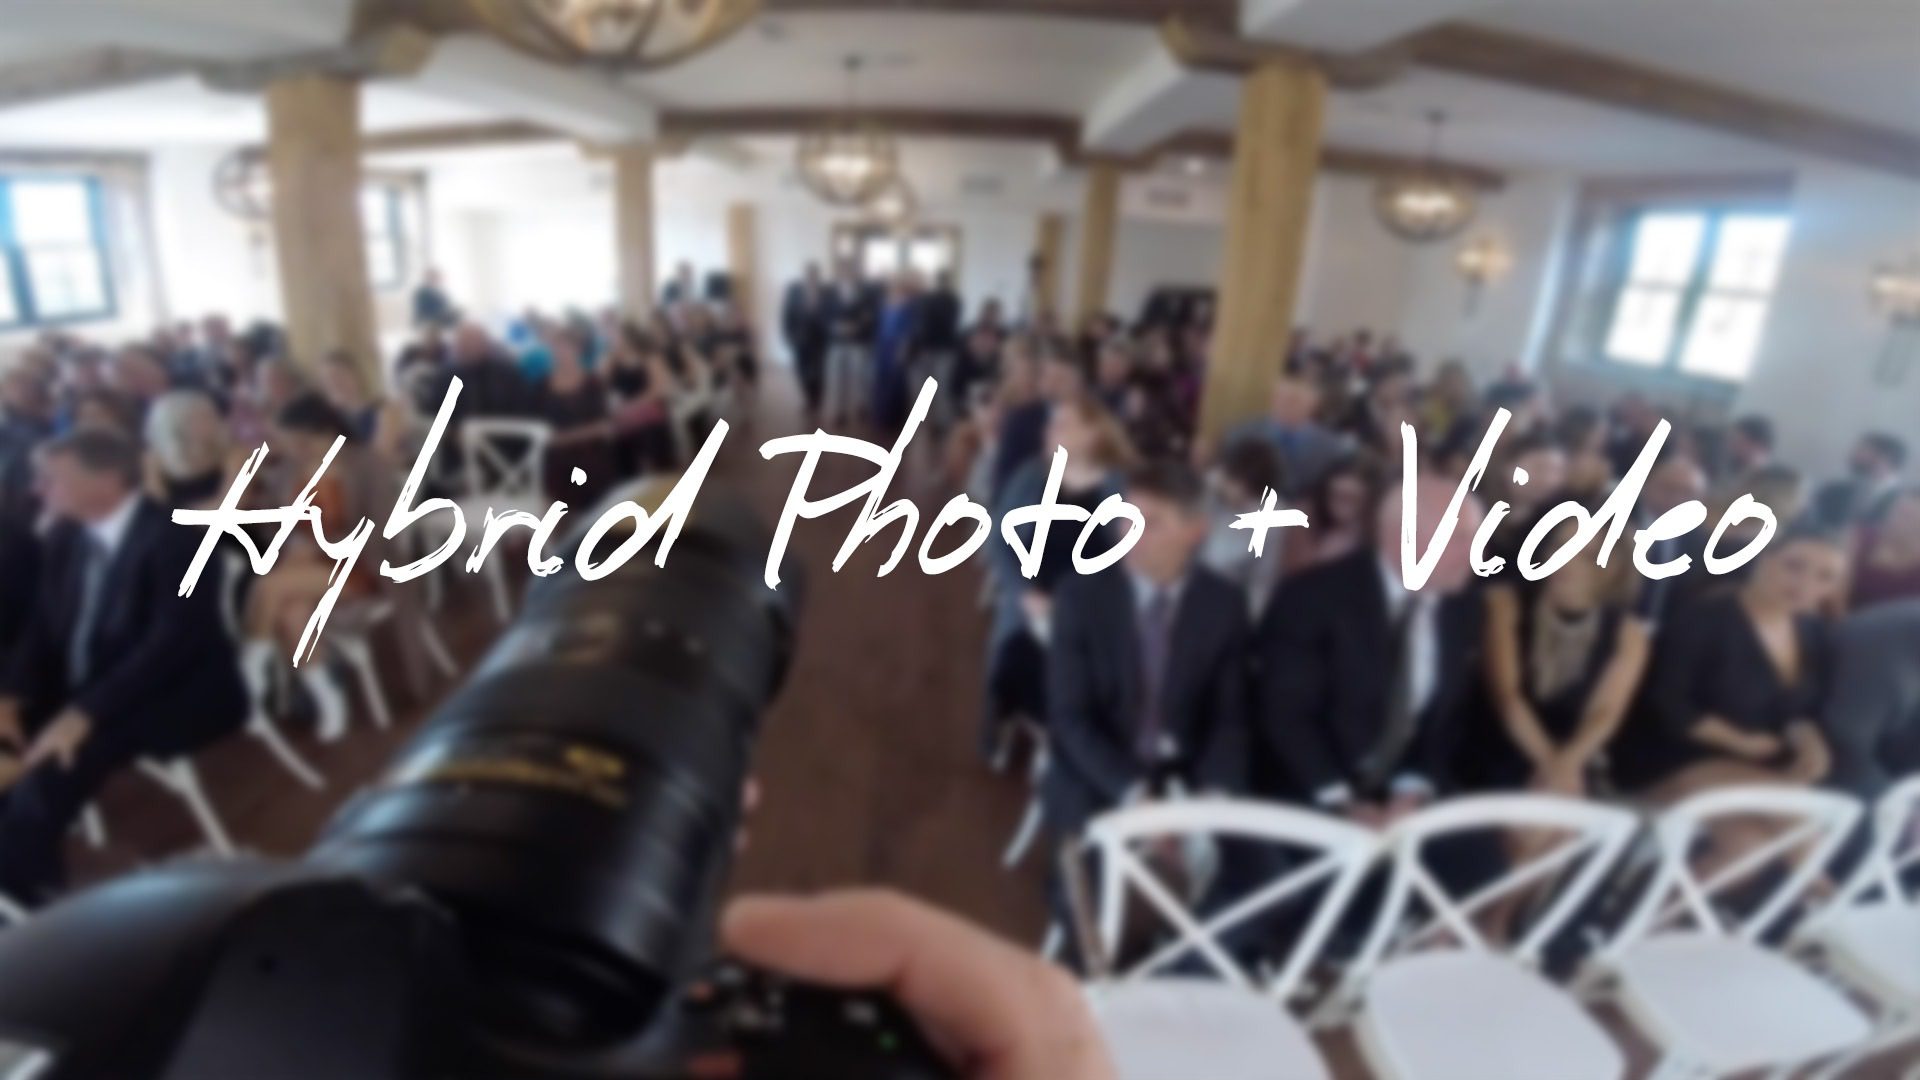 Taylor Jackson Hybrid Photo + Video Coverage at Weddings